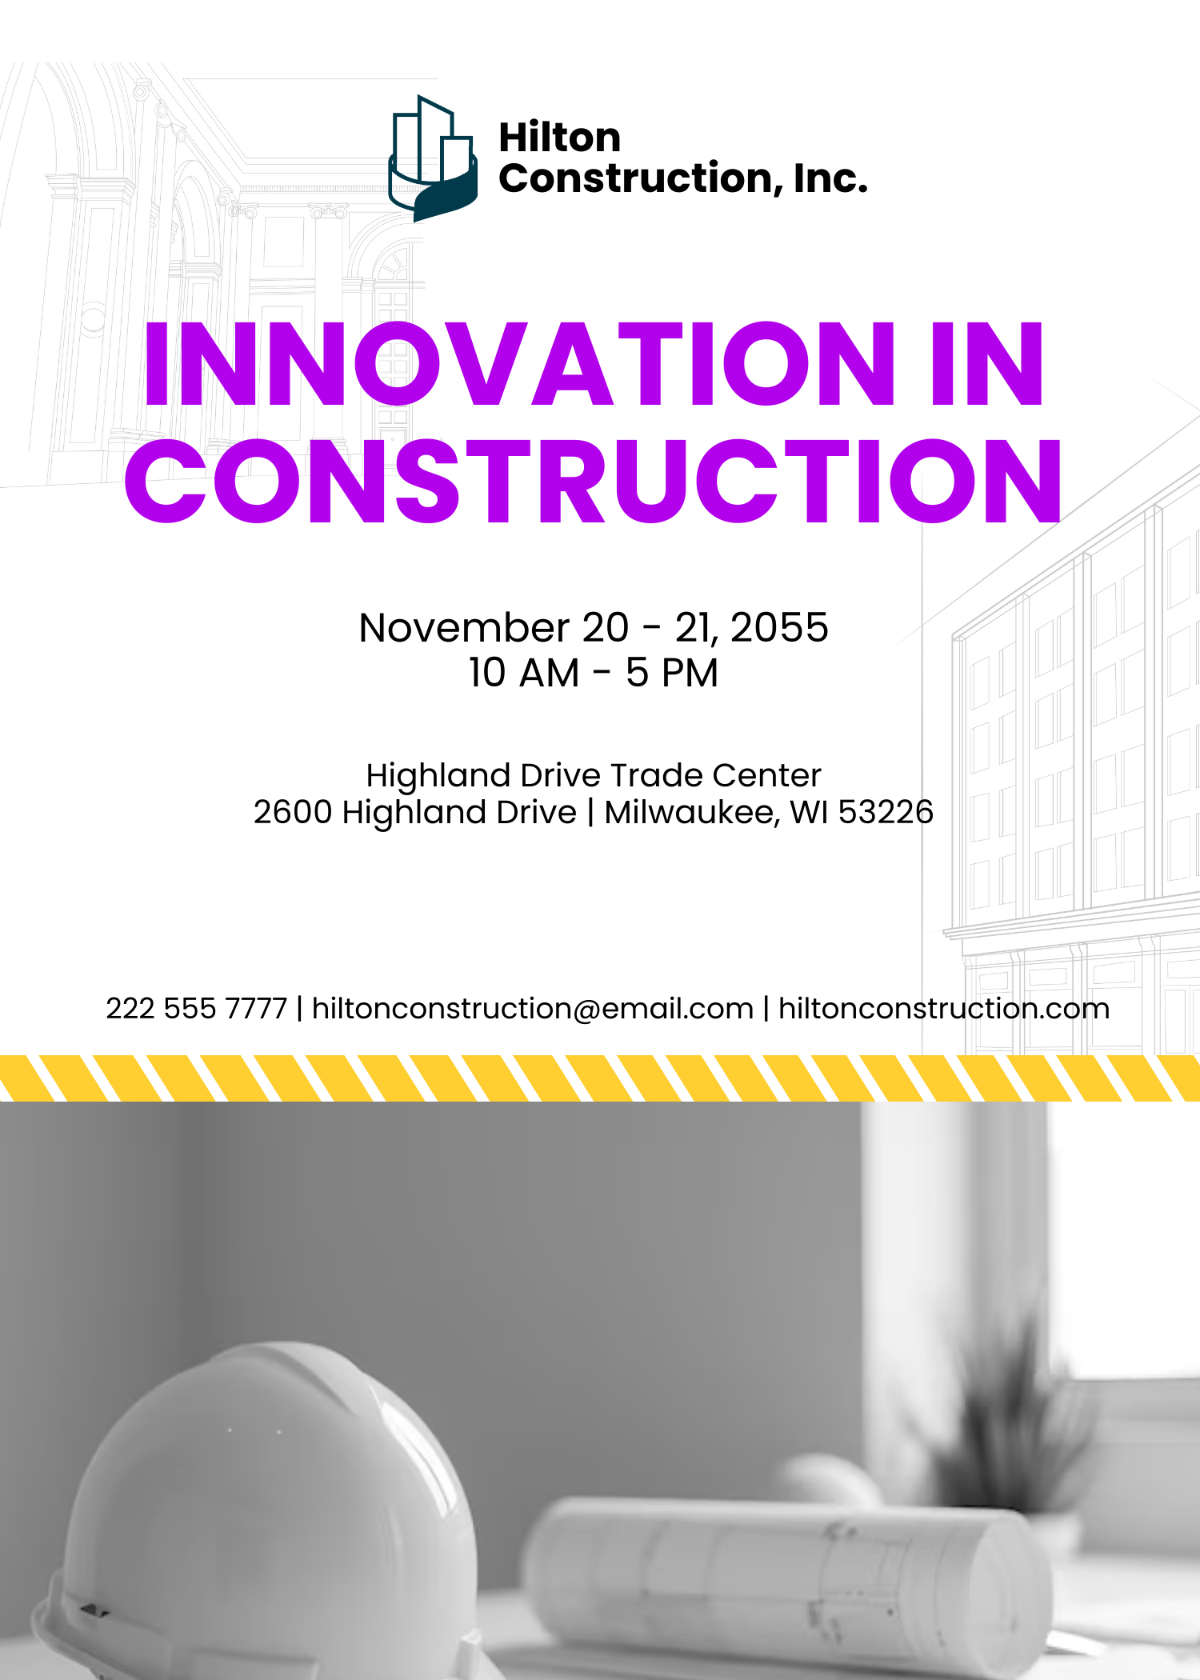 Construction Exhibition Invitation